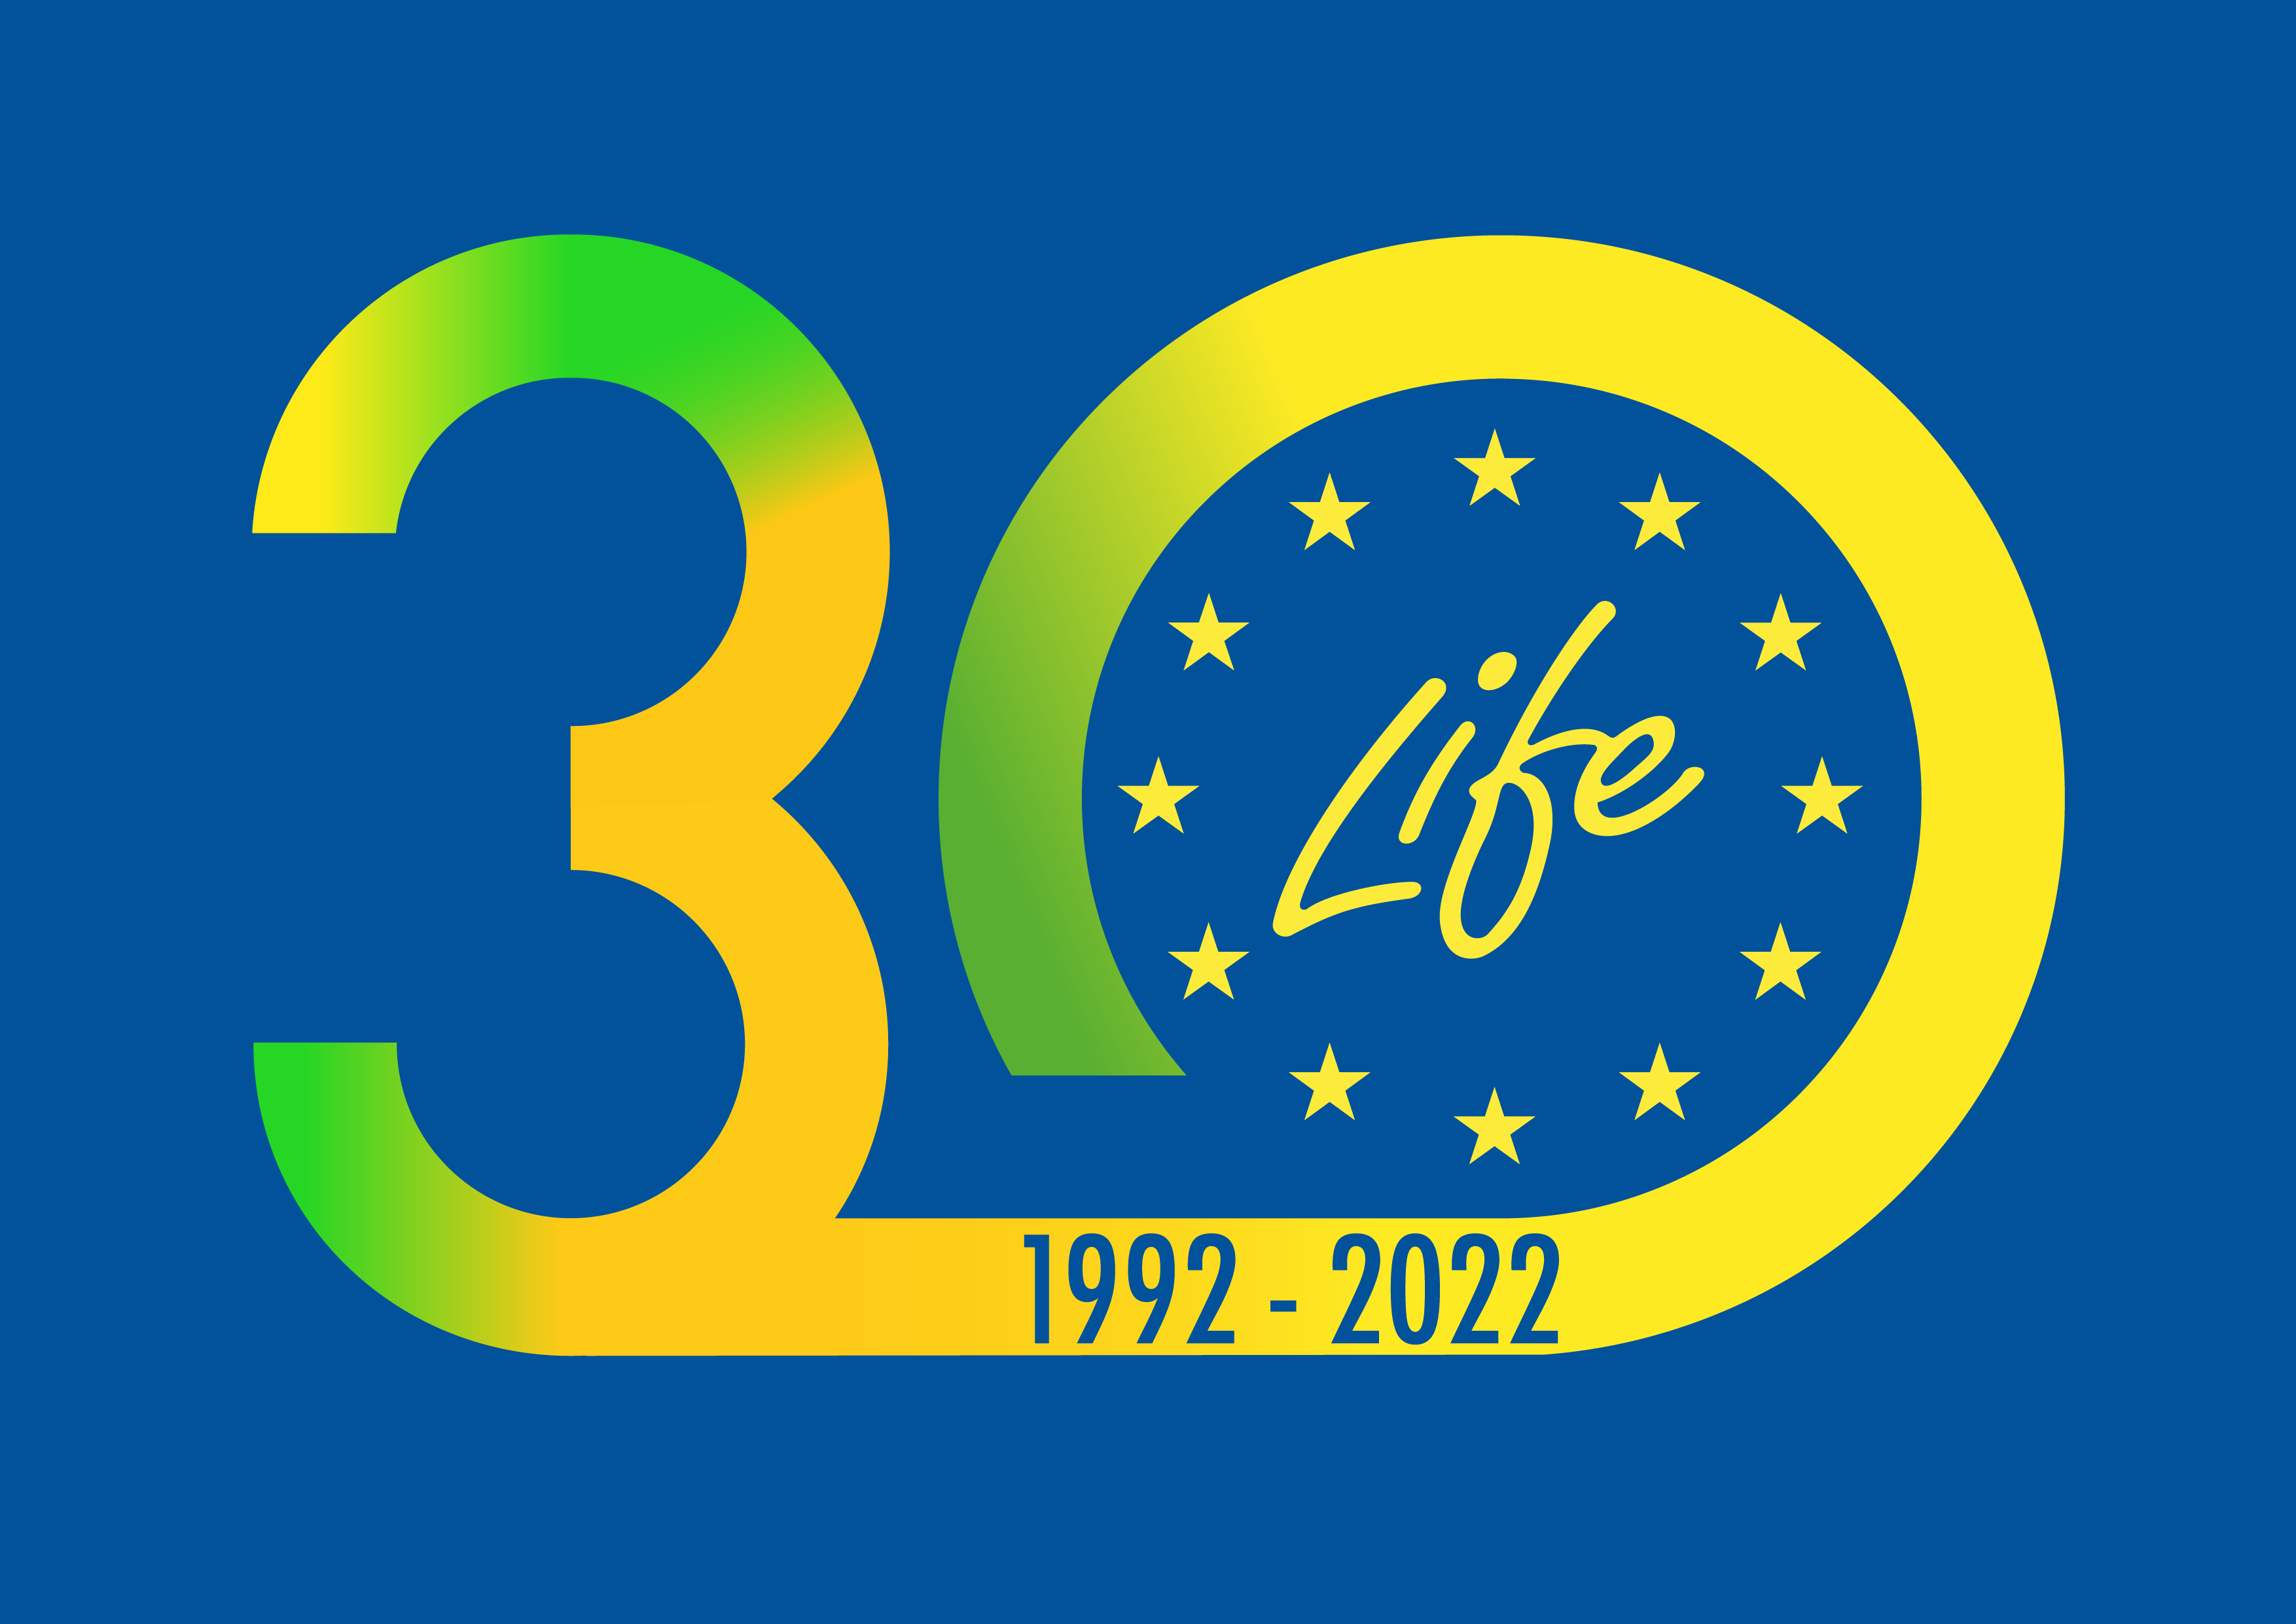 LIFEis30 badge